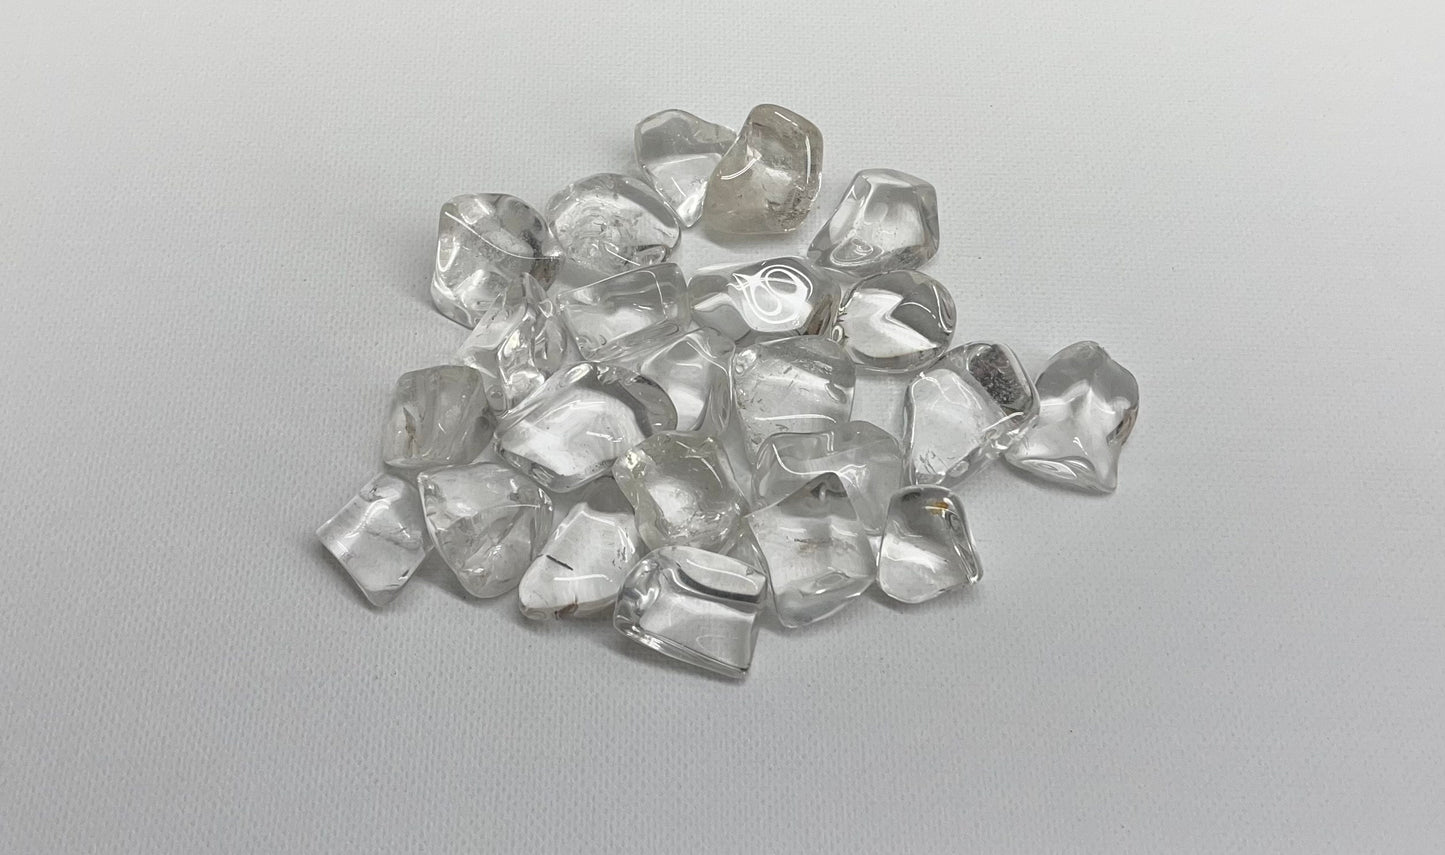 Tumbled Clear Quartz - Lillian's Crystal Shop